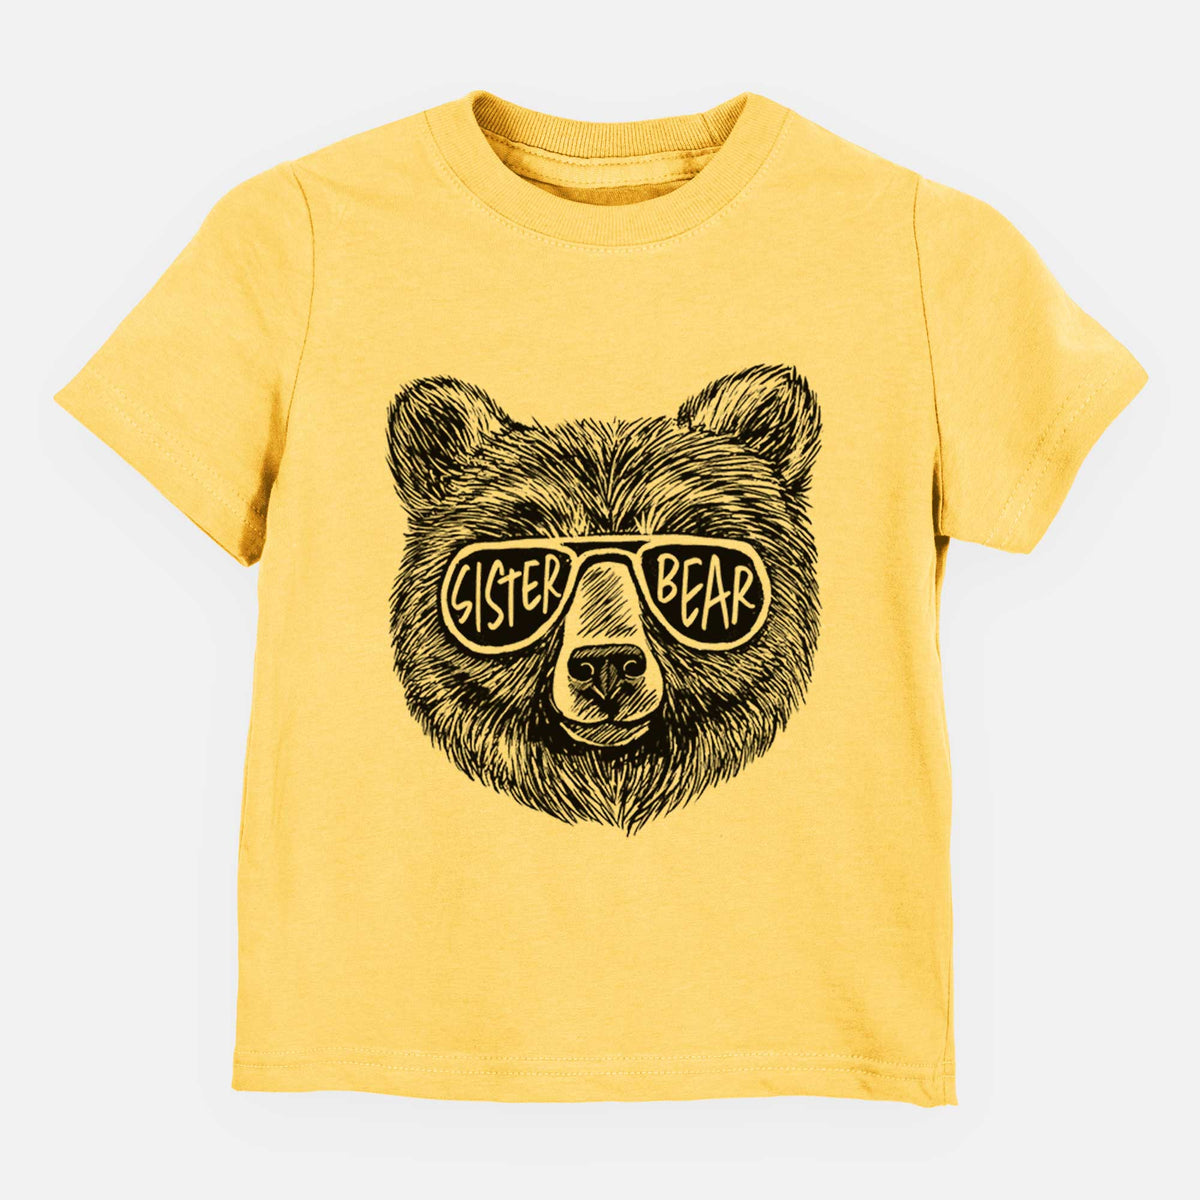 Sister Bear - Kids Shirt